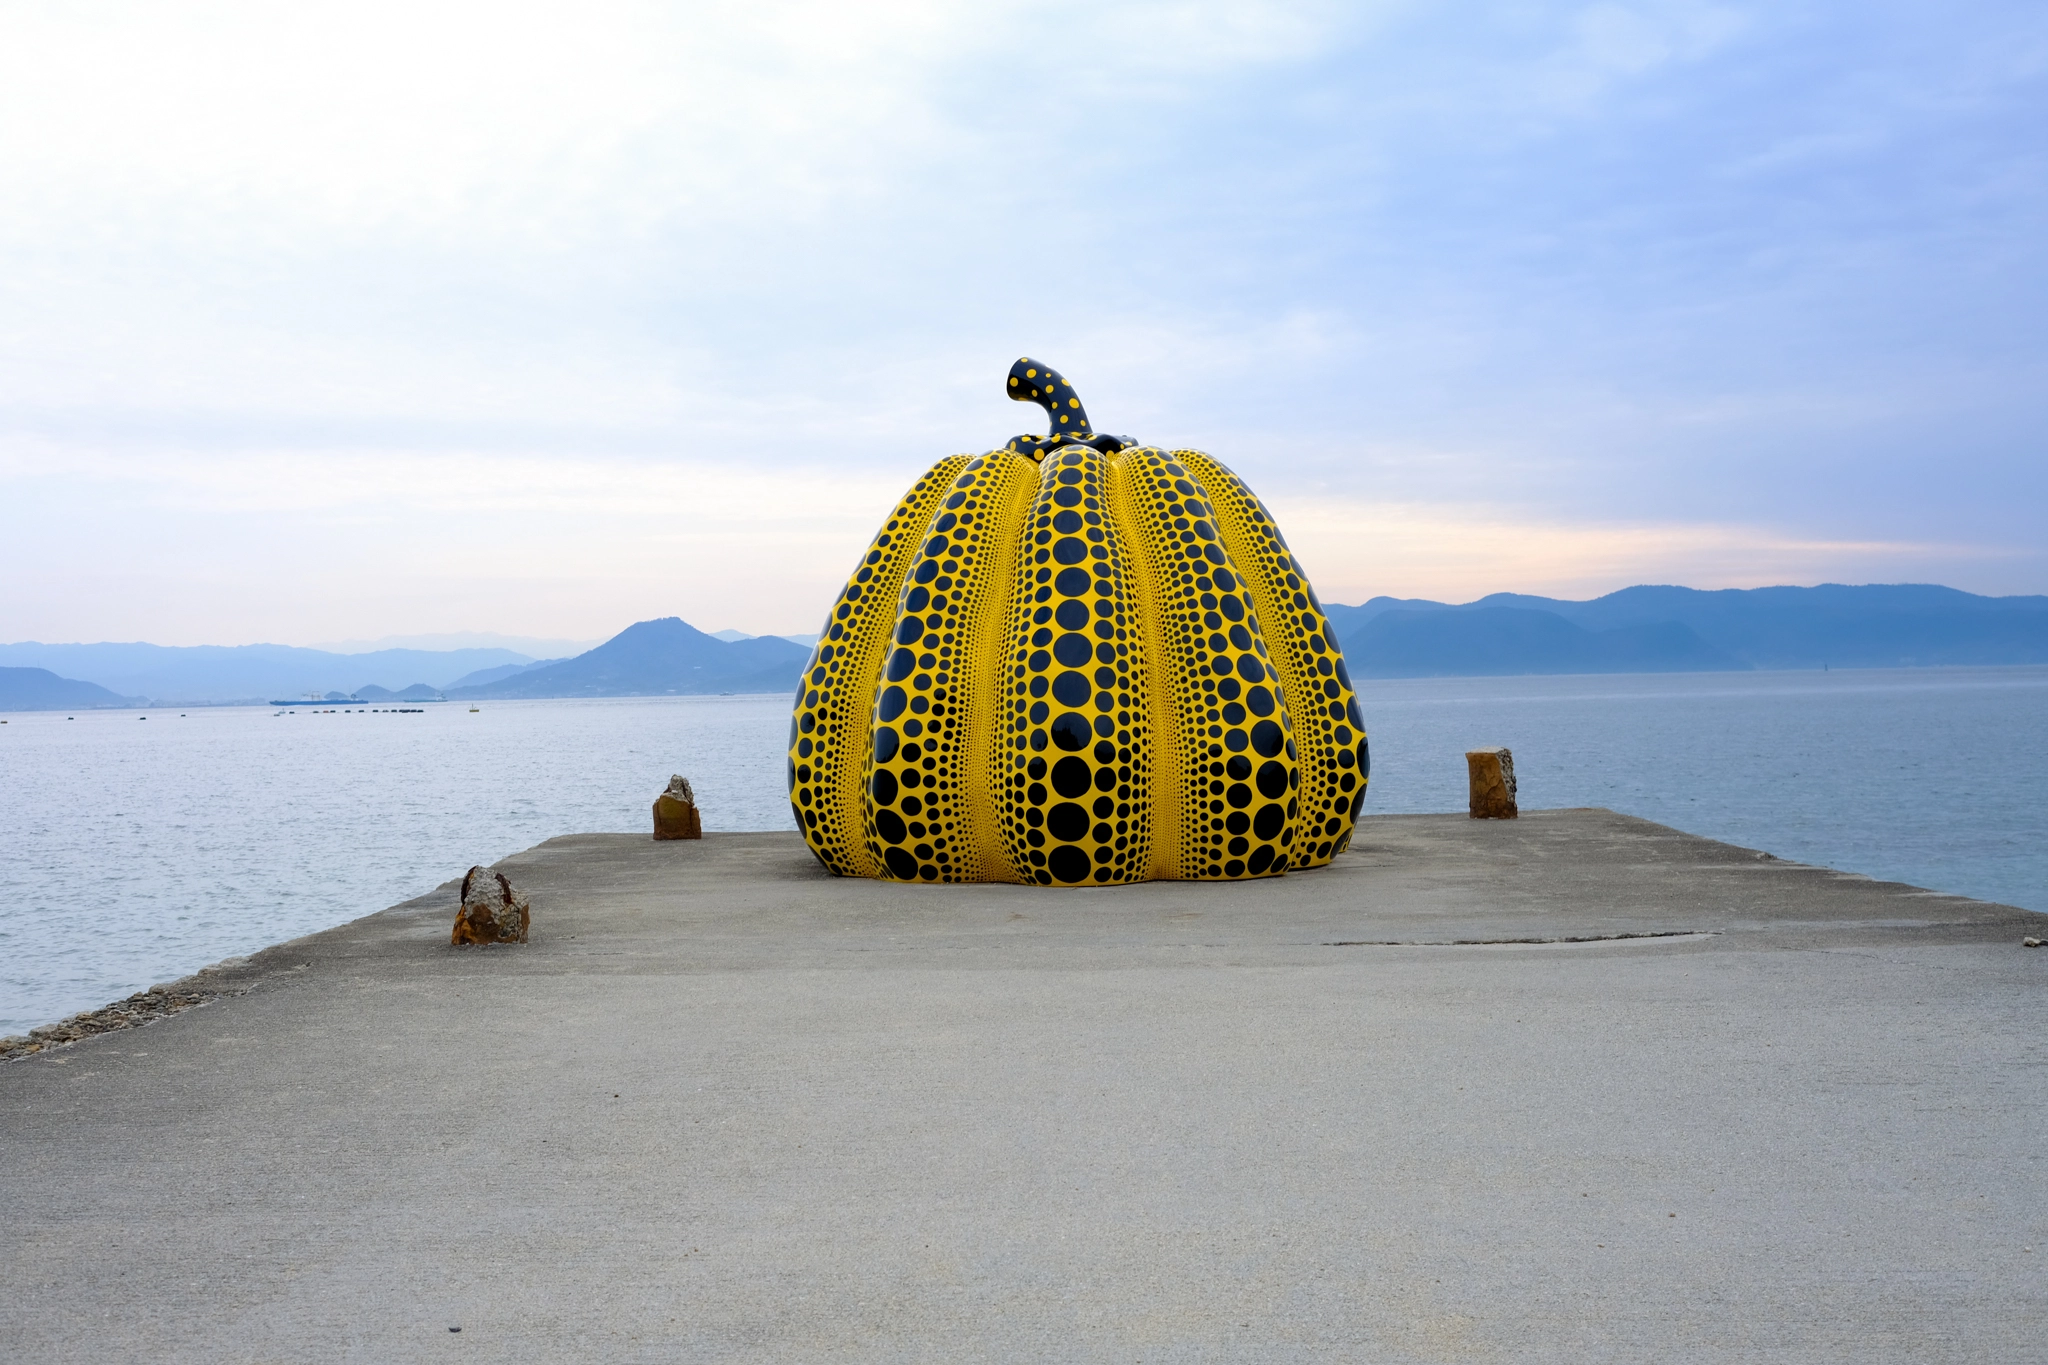 Where to see Yayoi Kusama's pumpkin sculptures in Japan